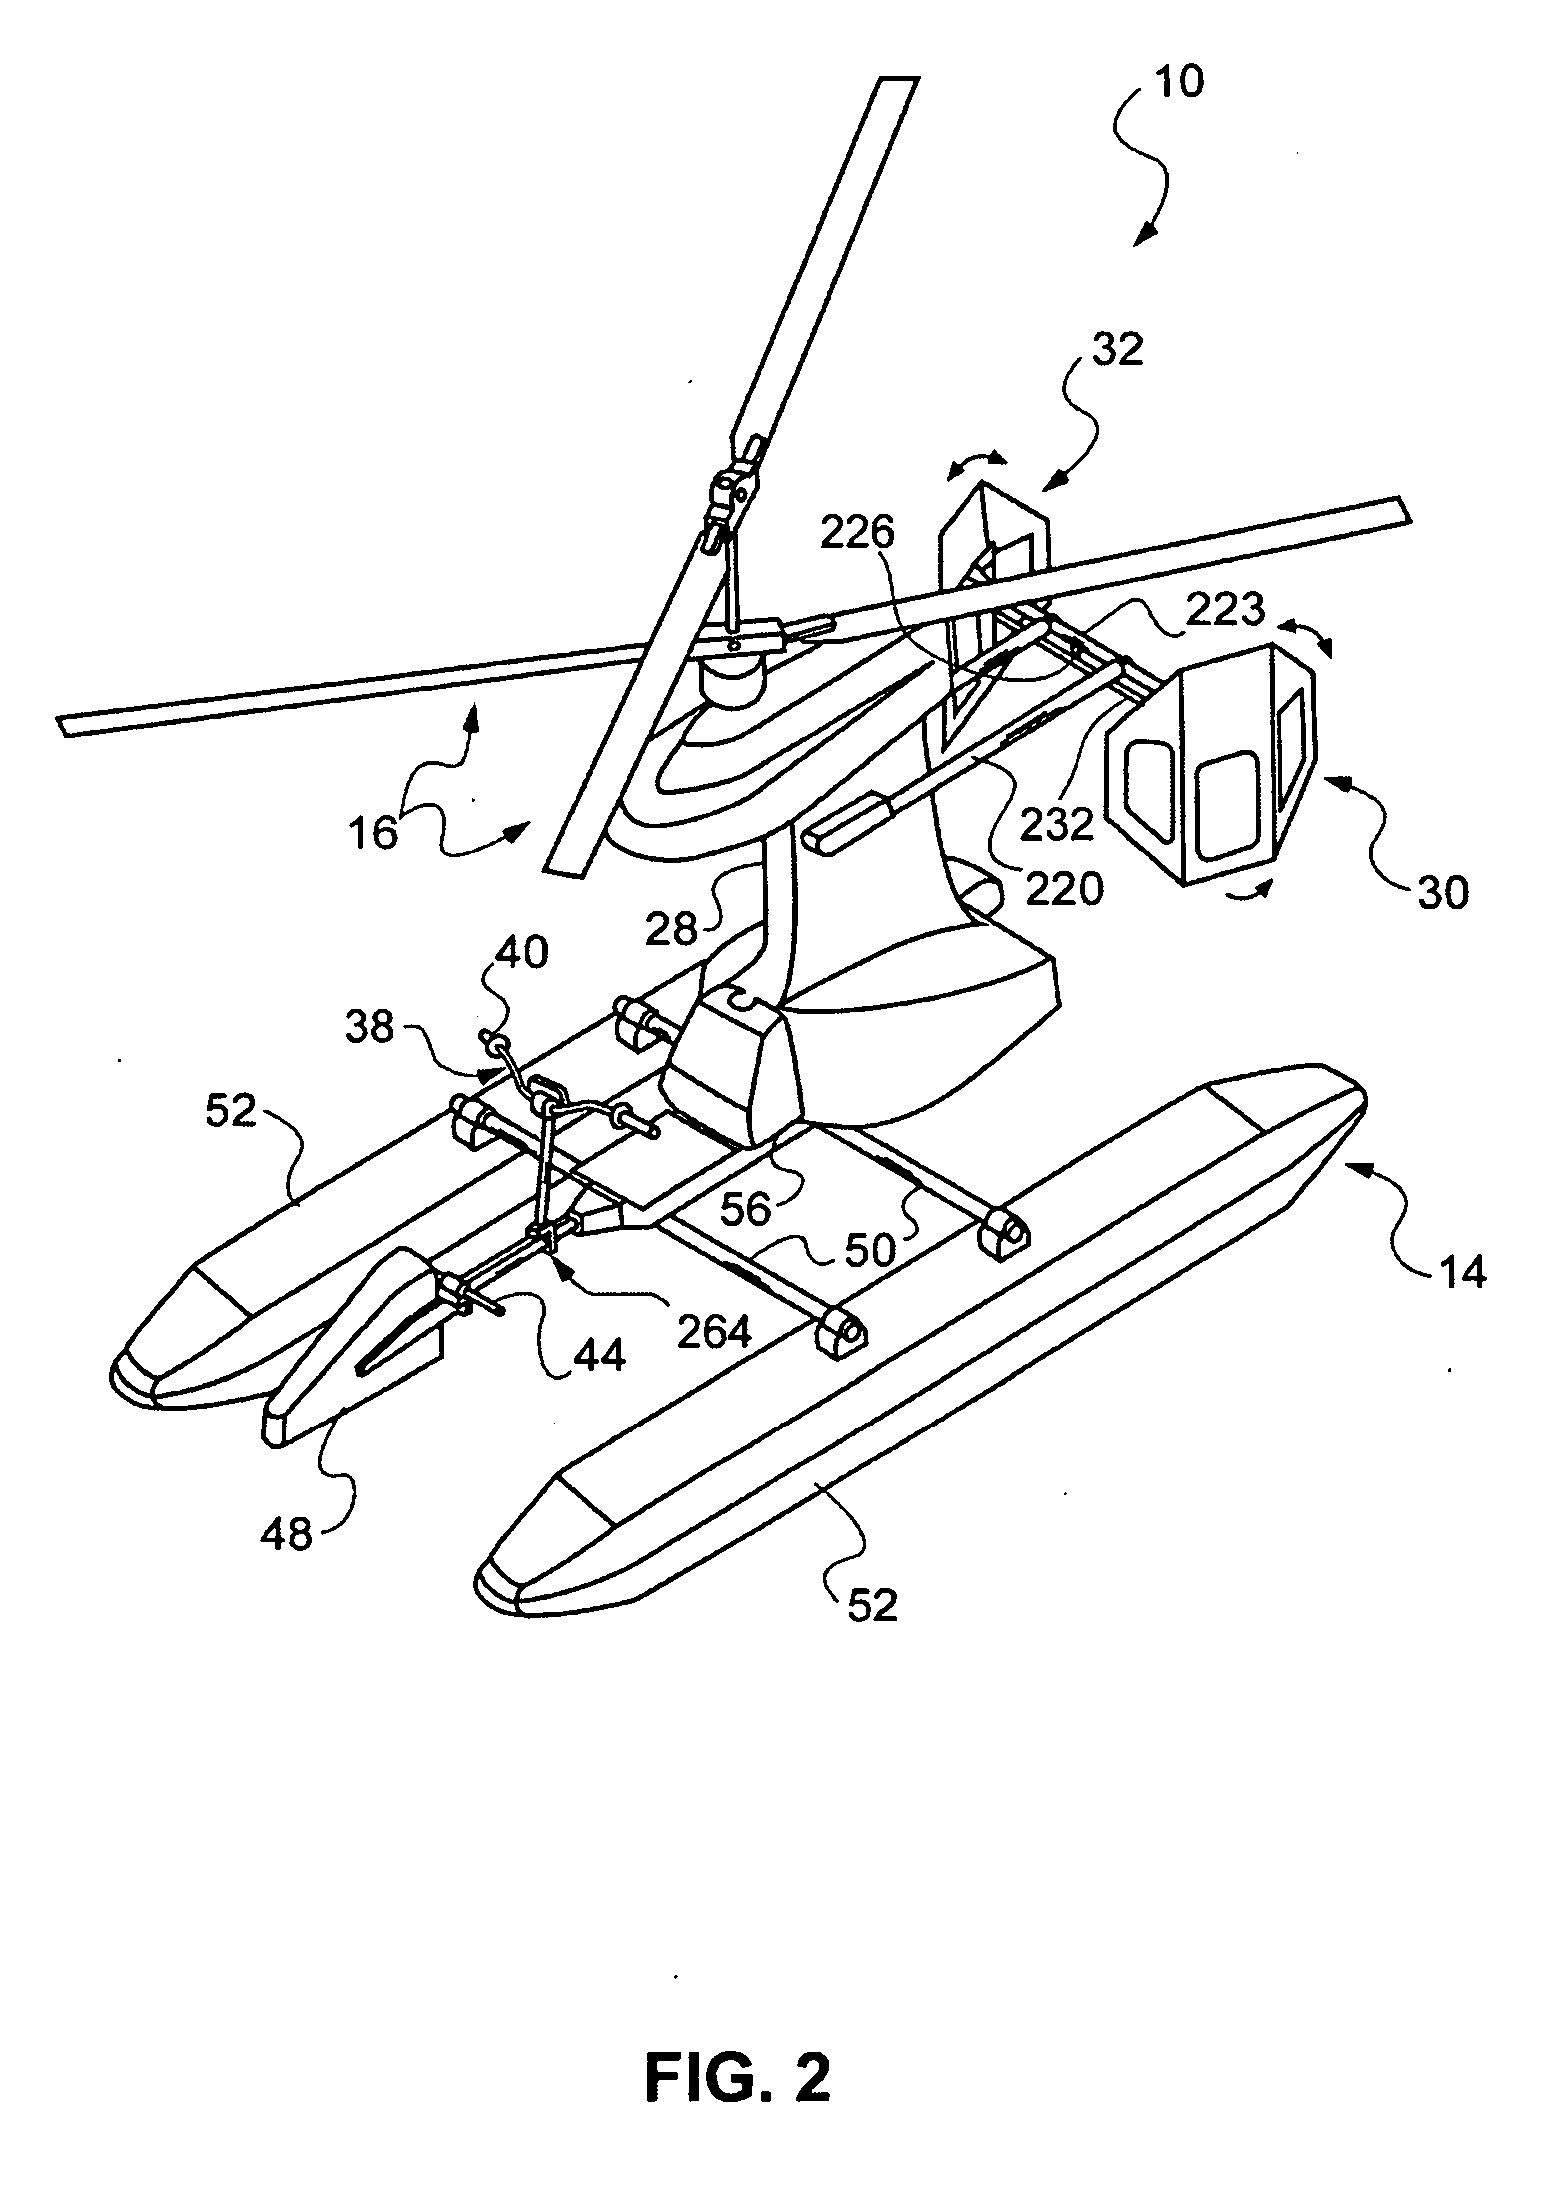 Ultralight coaxial rotor aircraft